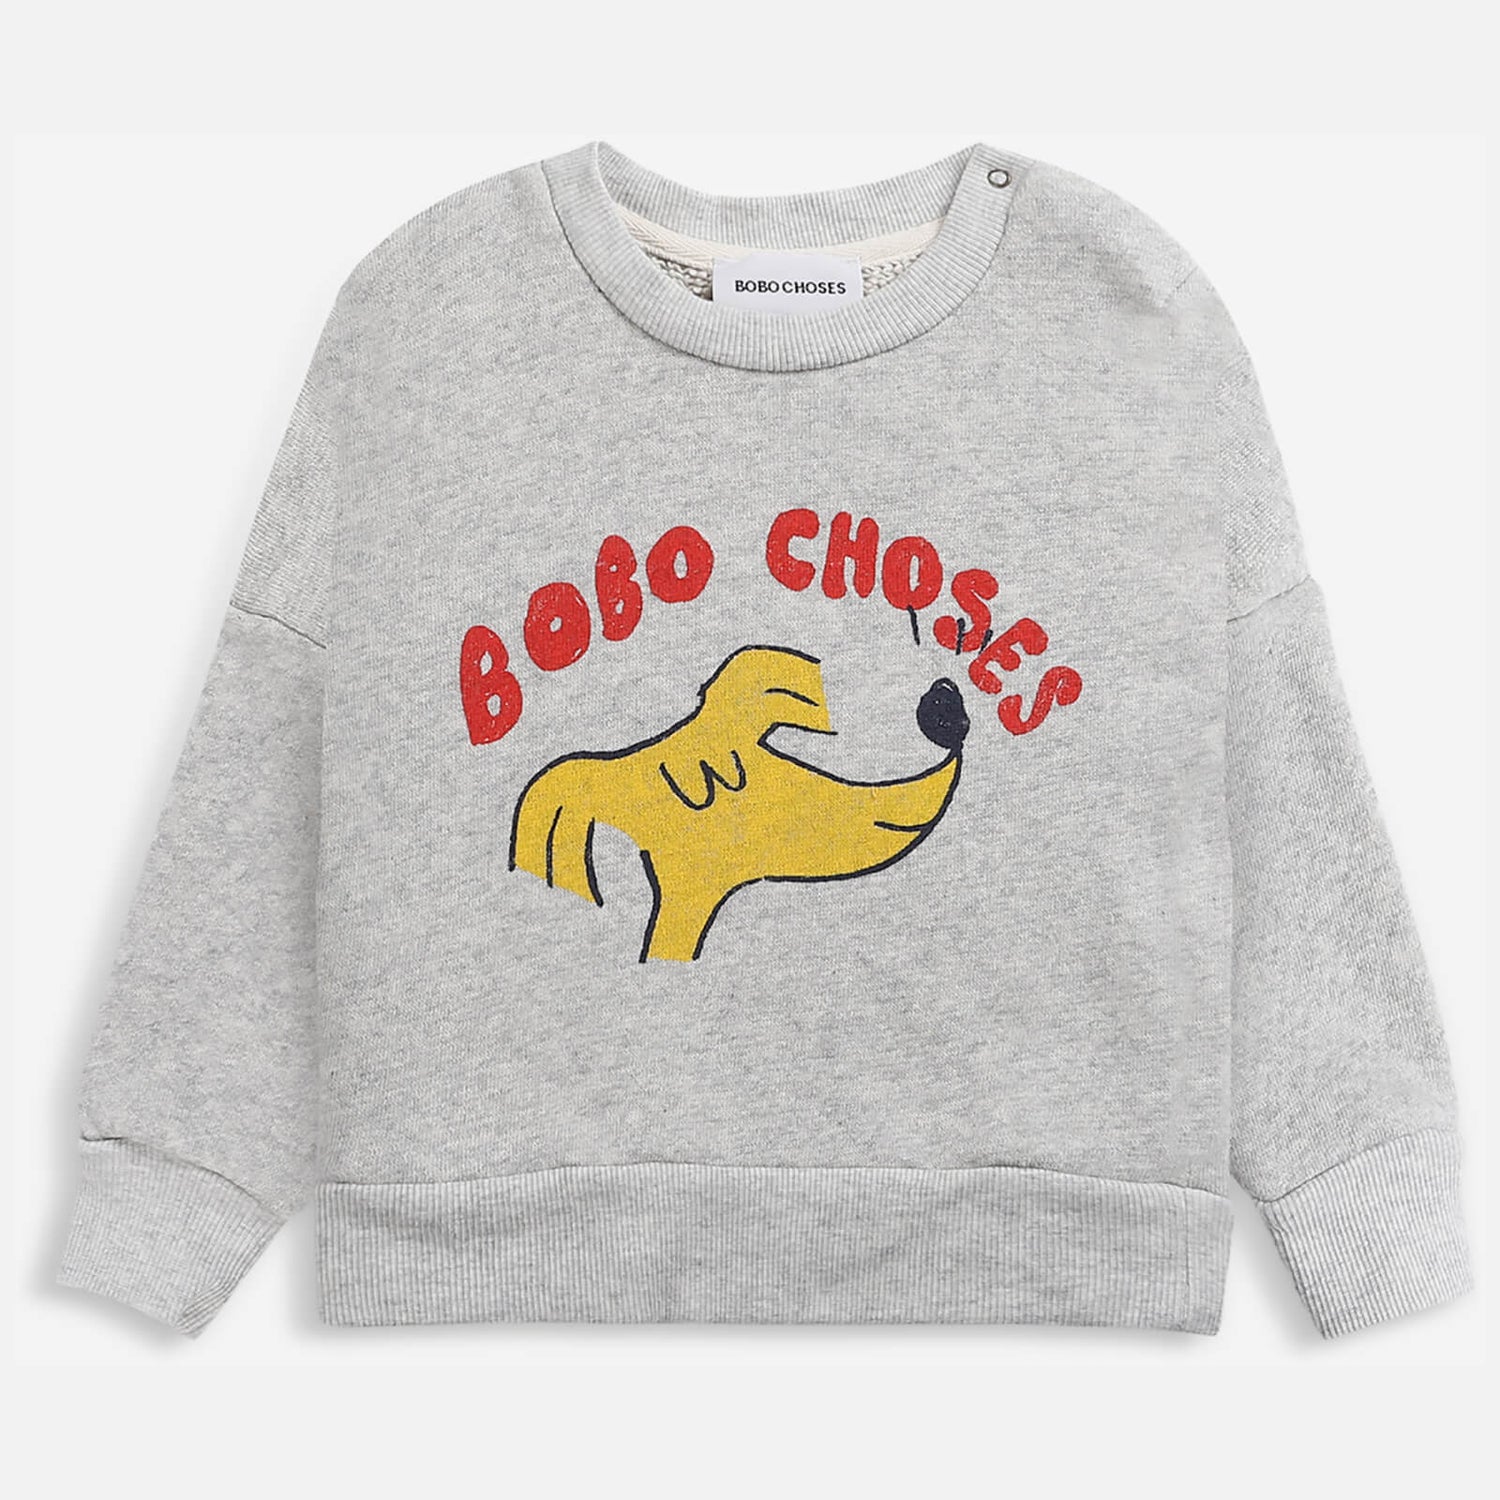 Bobo Choses Baby Sniffy Dog Sweatshirt - 3-6 months